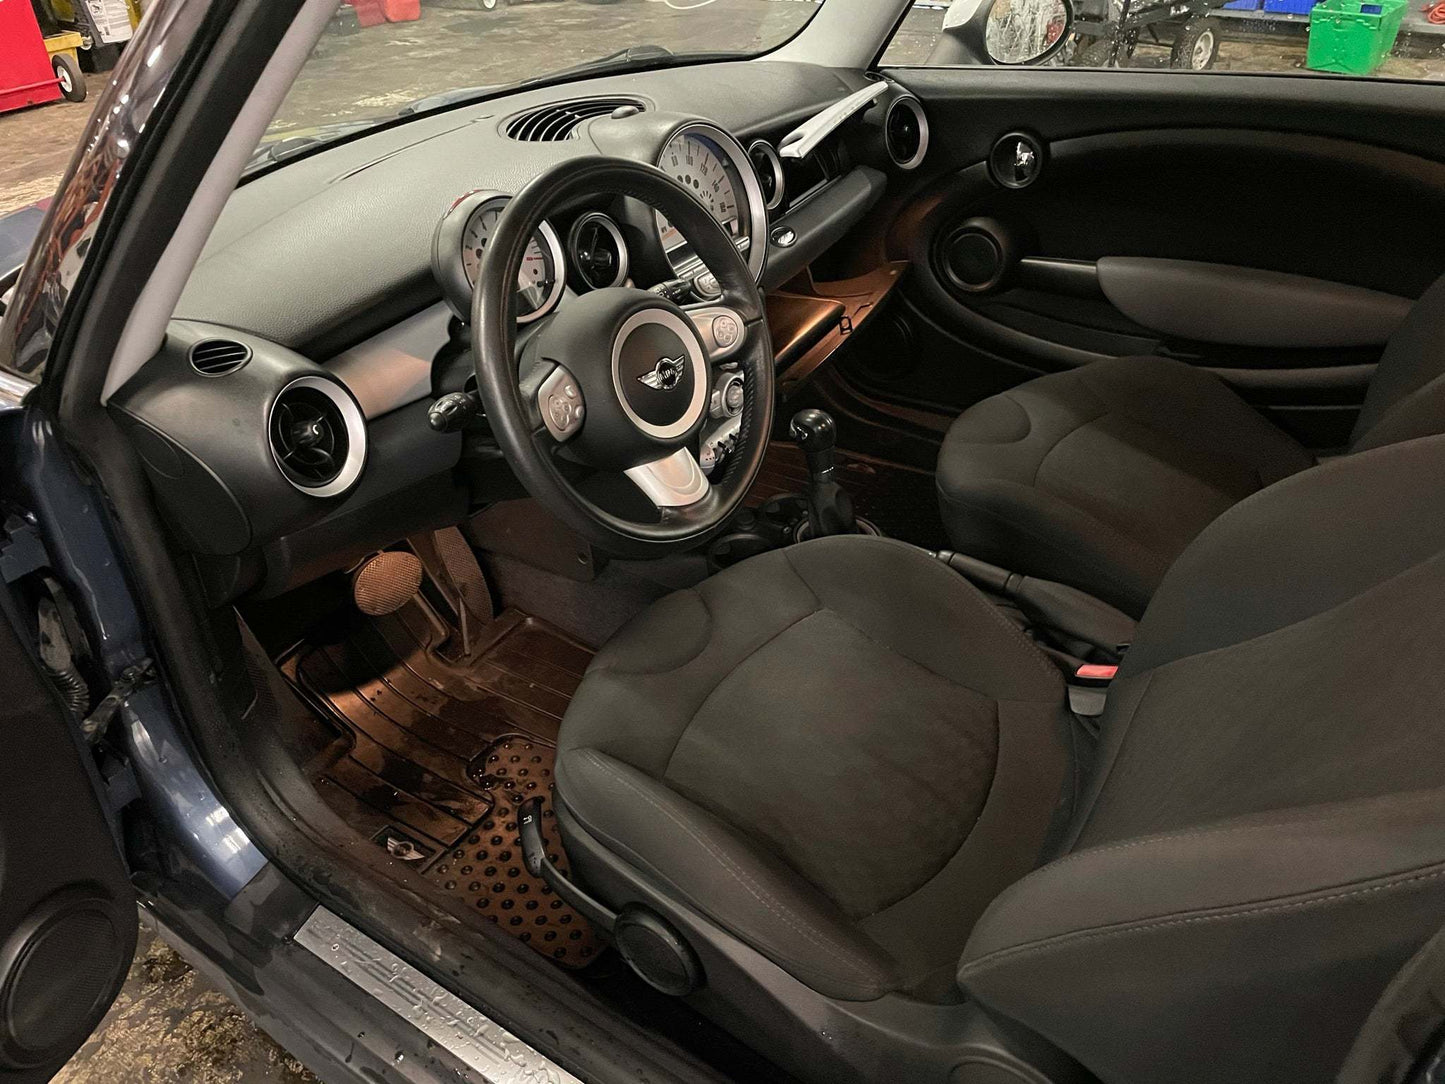 2010 MINI Cooper Coupe Base, New Parts Car (April 2021) Stk # 232